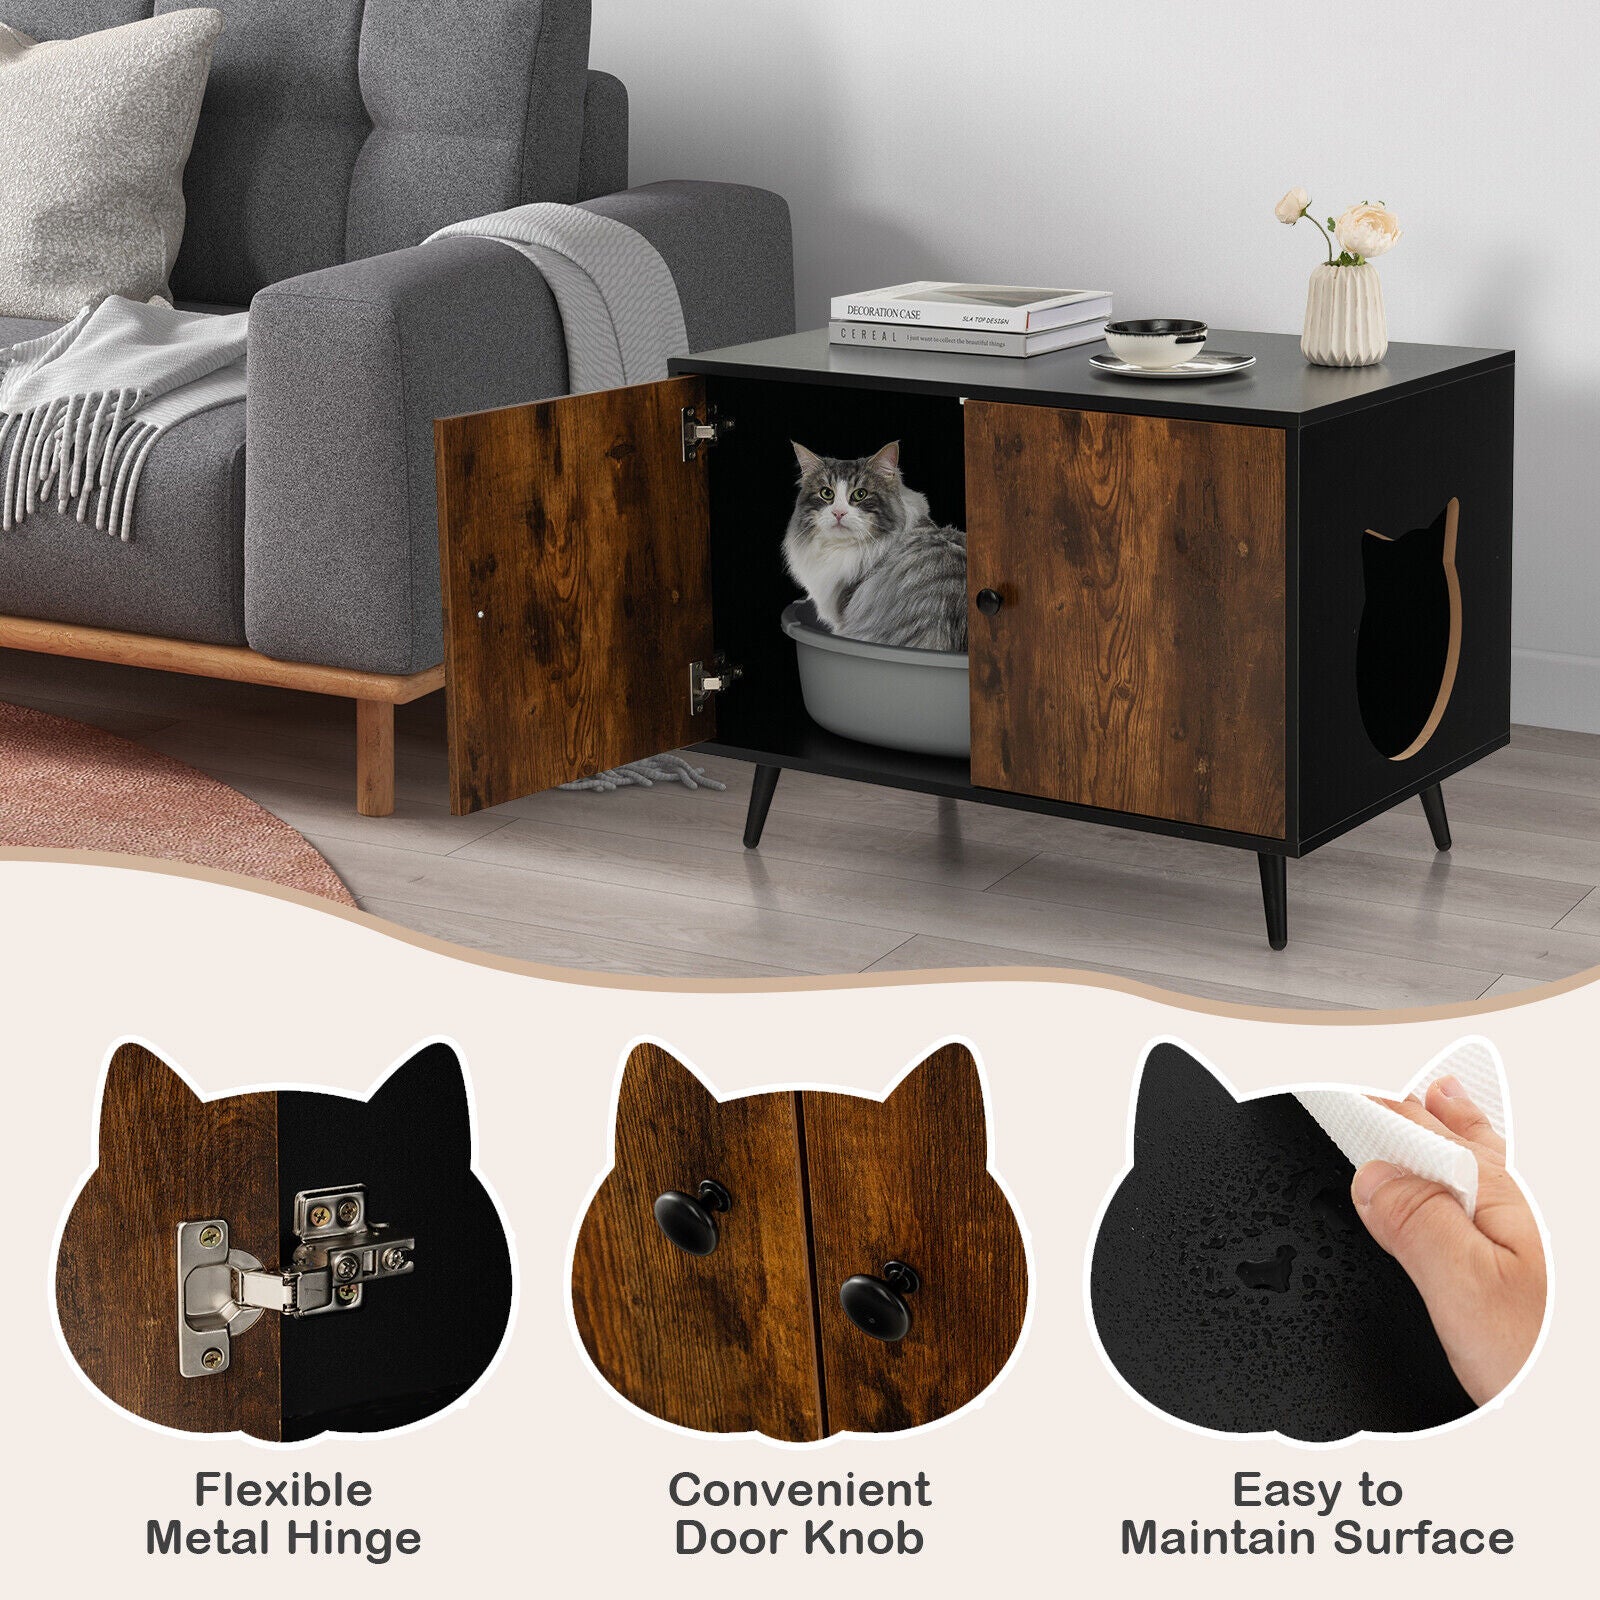 Litter Box Enclosure - Cat Litter Box Furniture With Enclosure